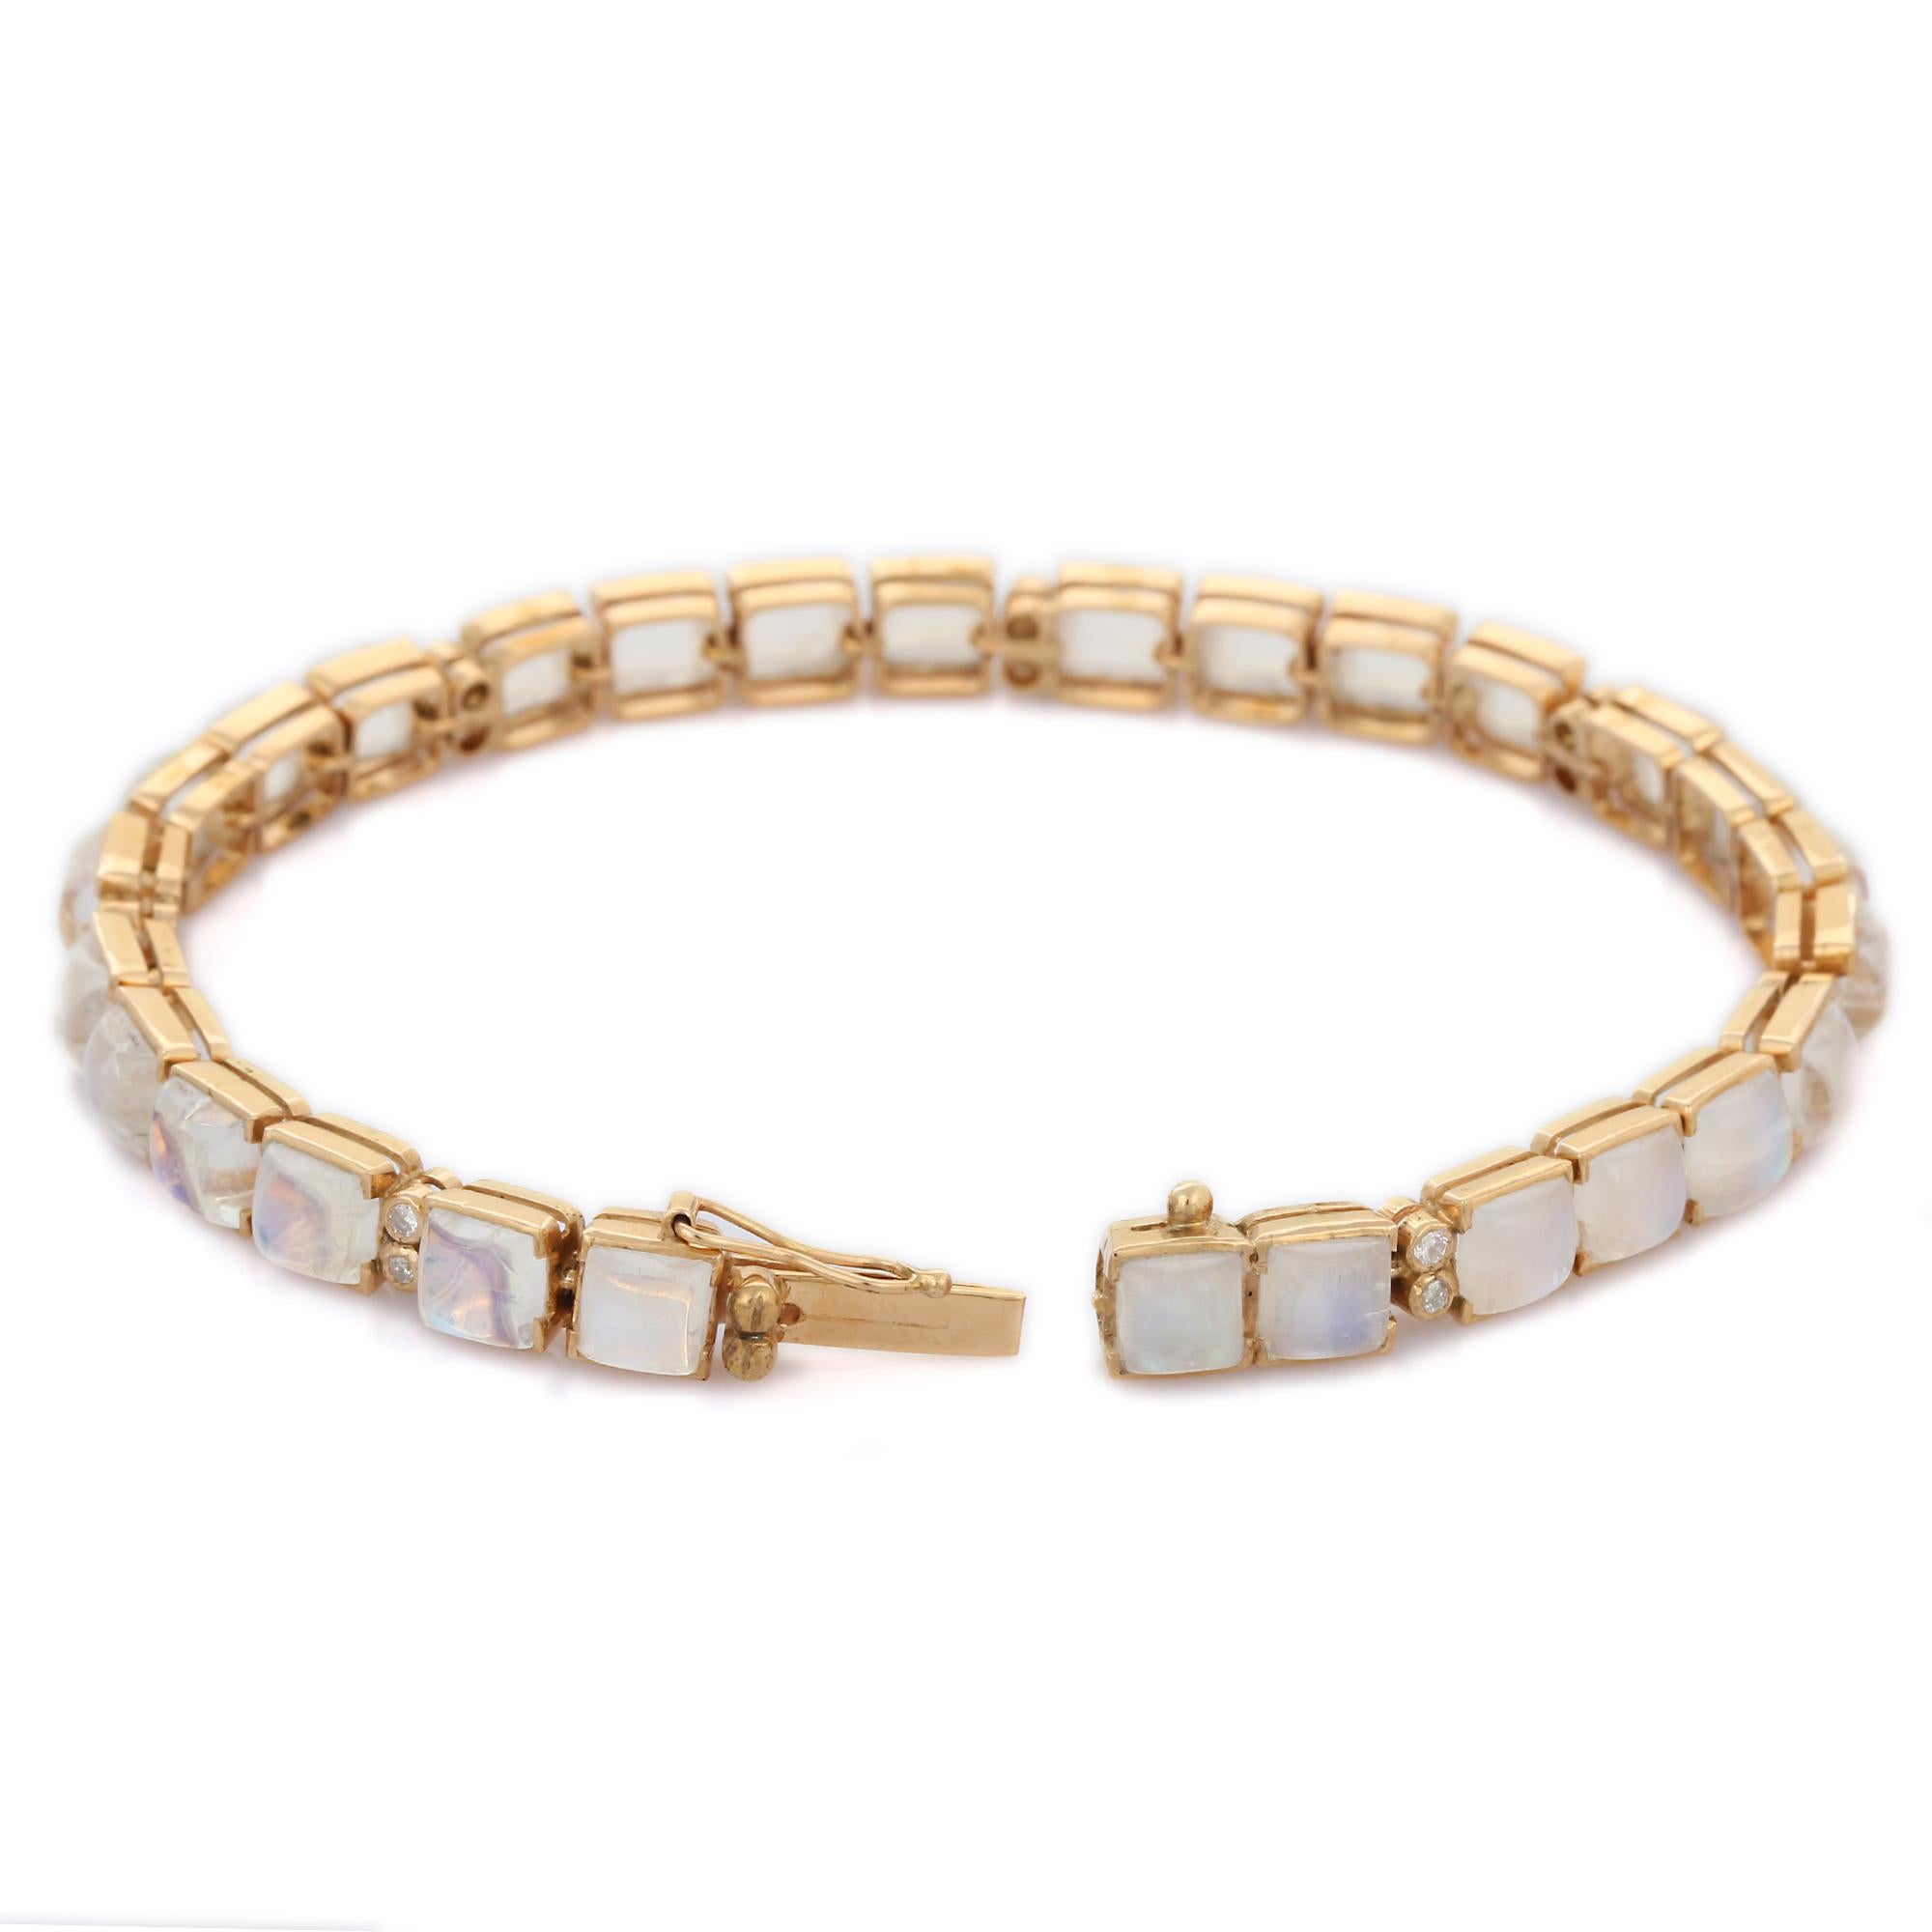 12.5ct 18ct yellow gold tennis bracelet guaranteed g/h colour si purity natural diamonds